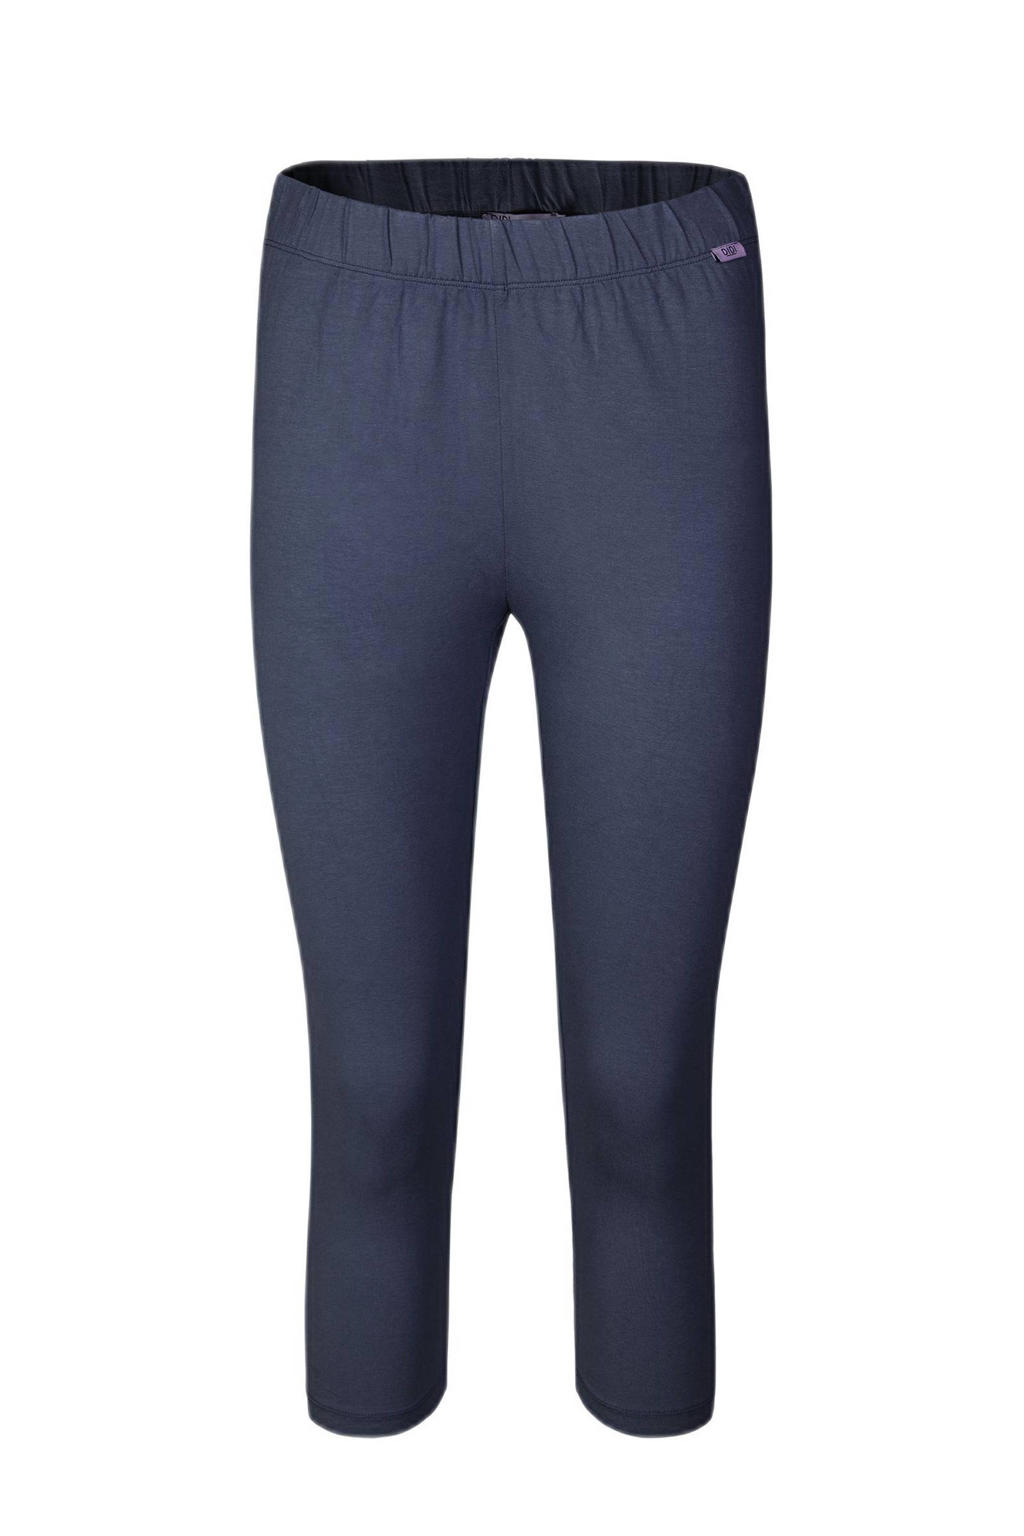 Donkerblauwe dames Didi capri legging van viscose met skinny fit, regular waist en elastische tailleband